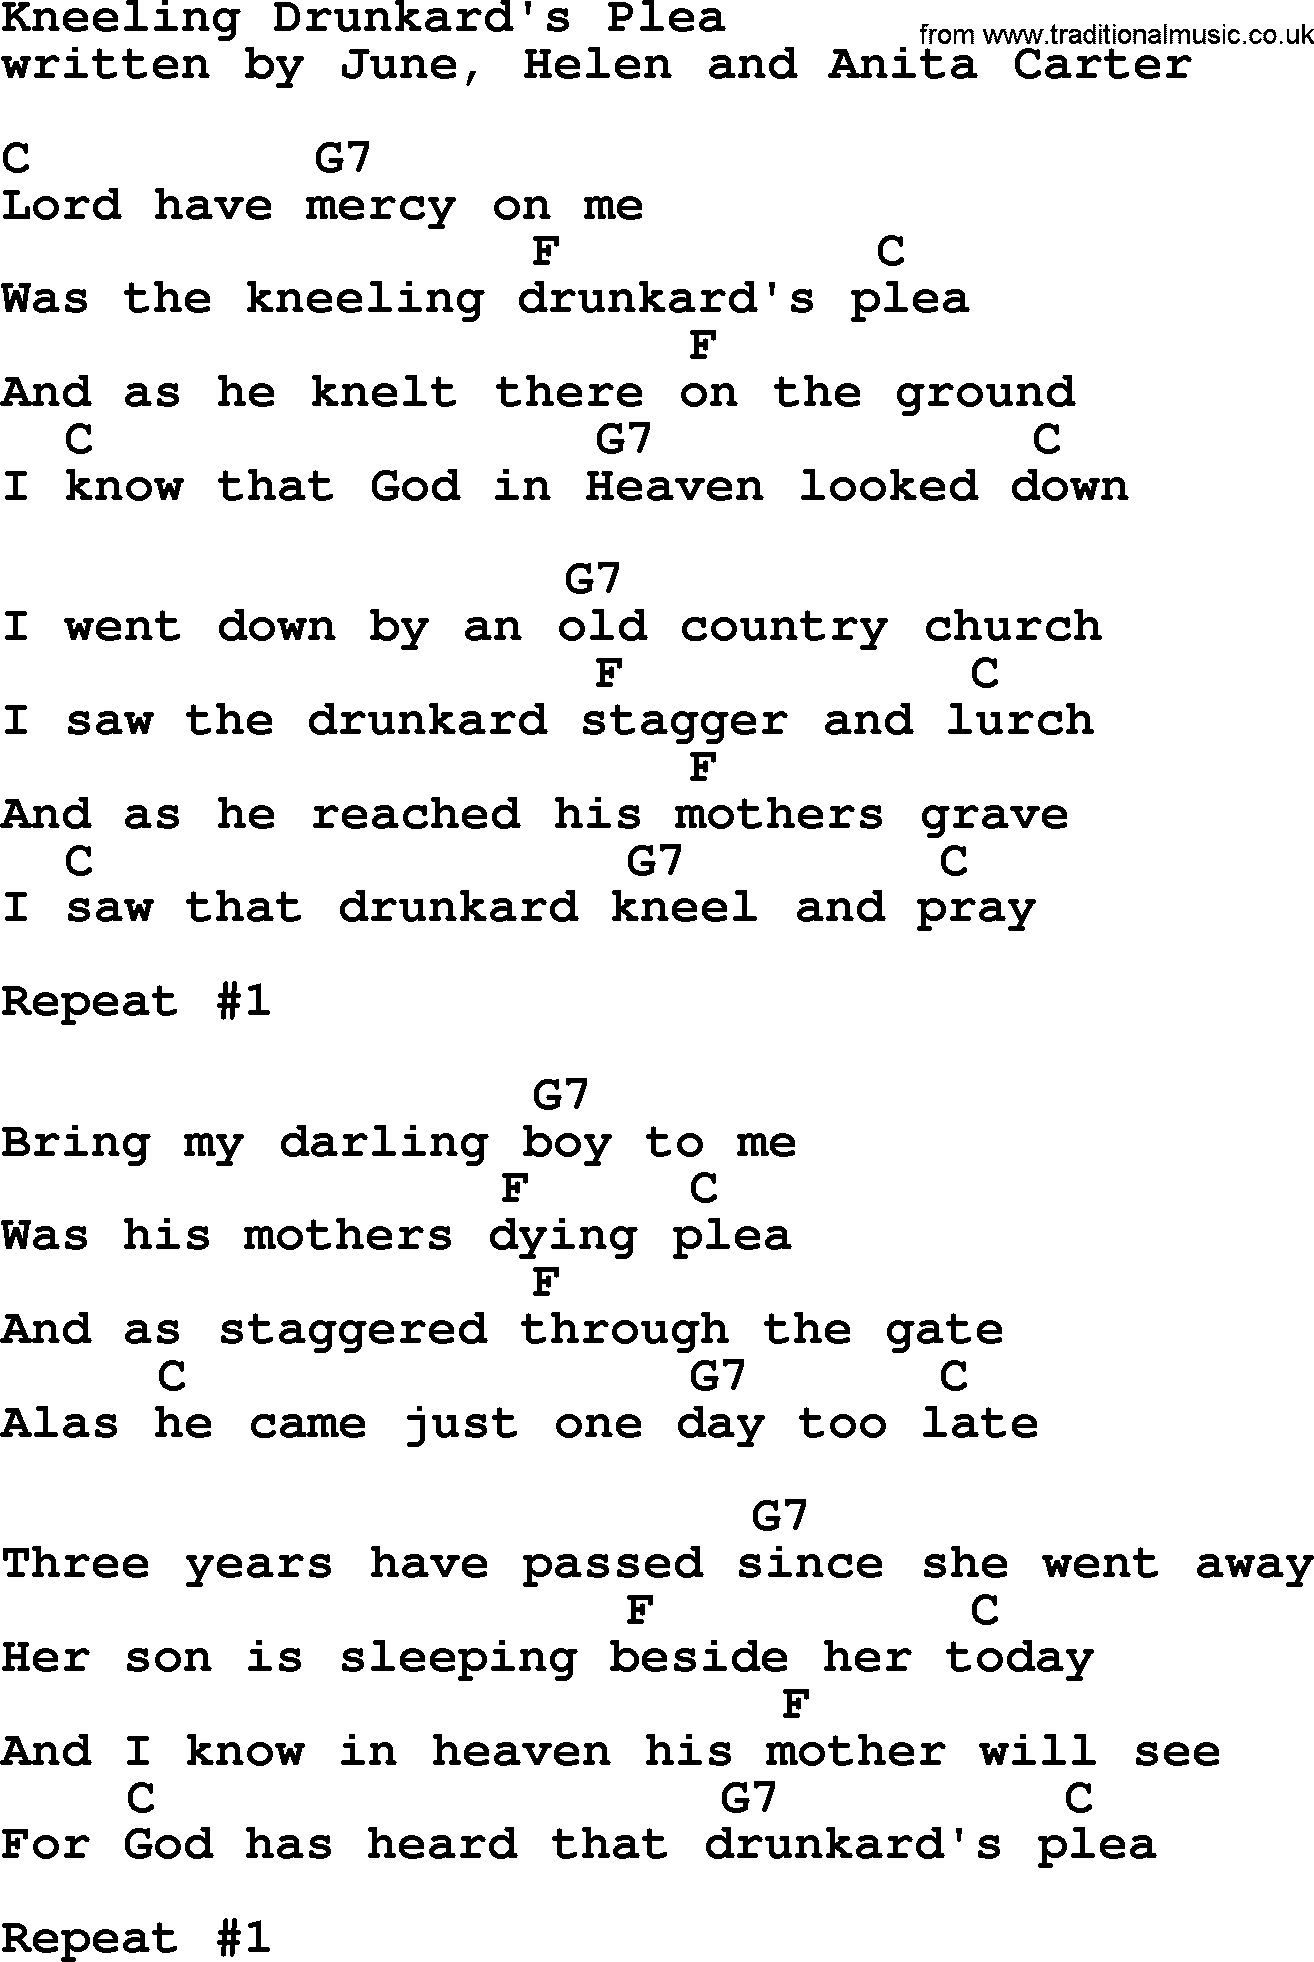 Johnny Cash song Kneeling Drunkard's Plea, lyrics and chords